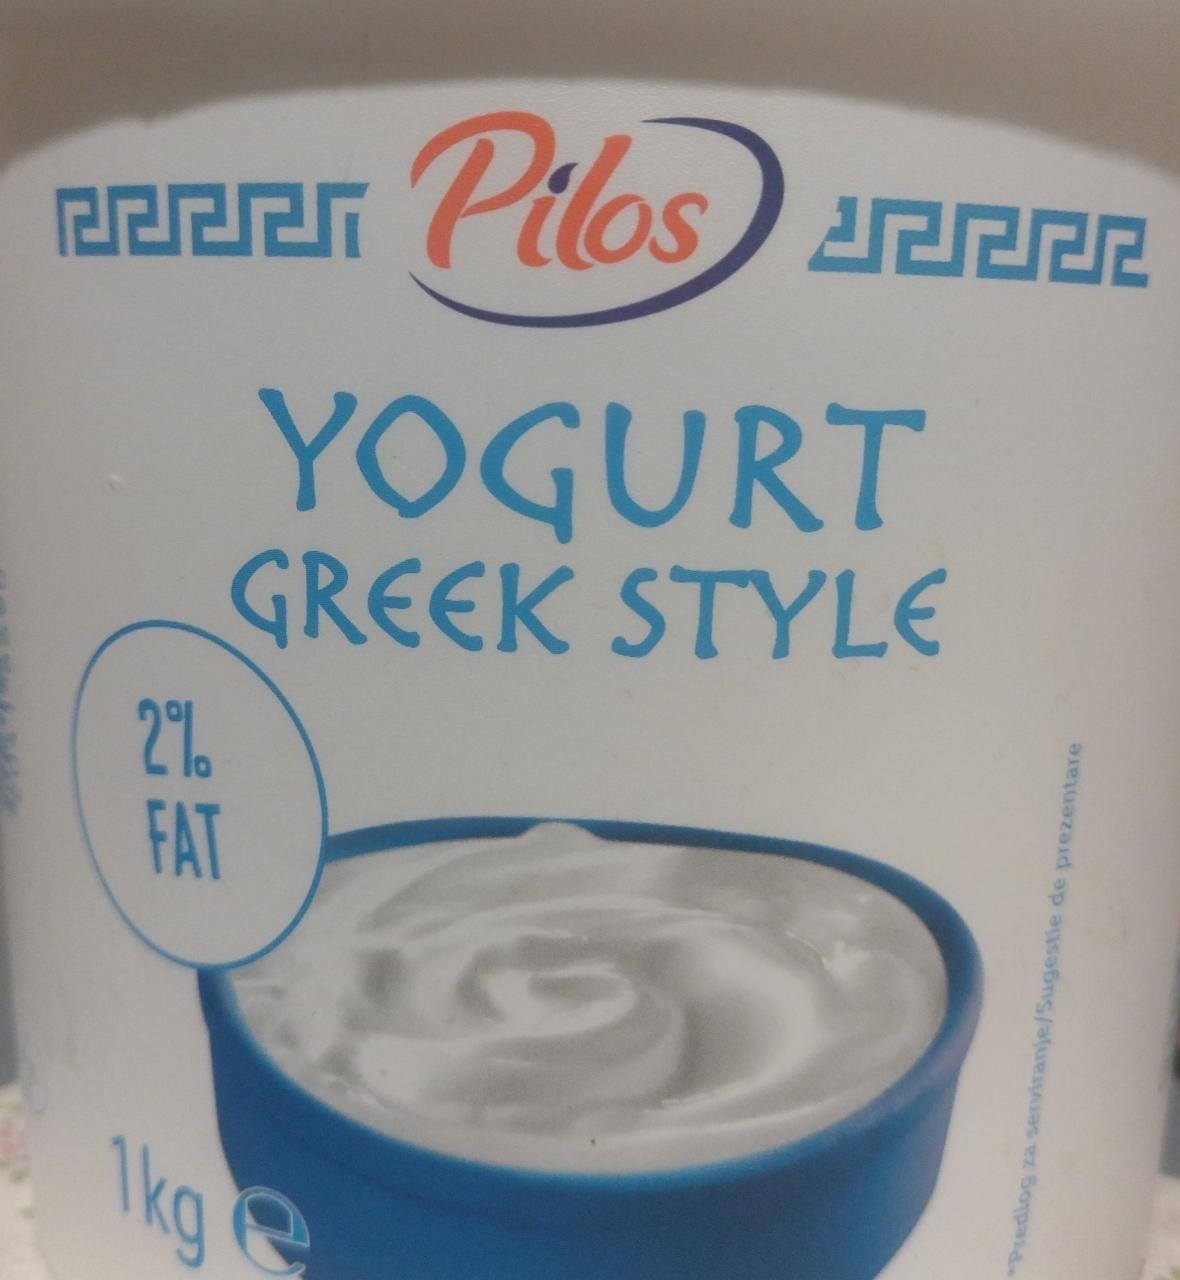 Képek - Görög joghurt 2% Pilos